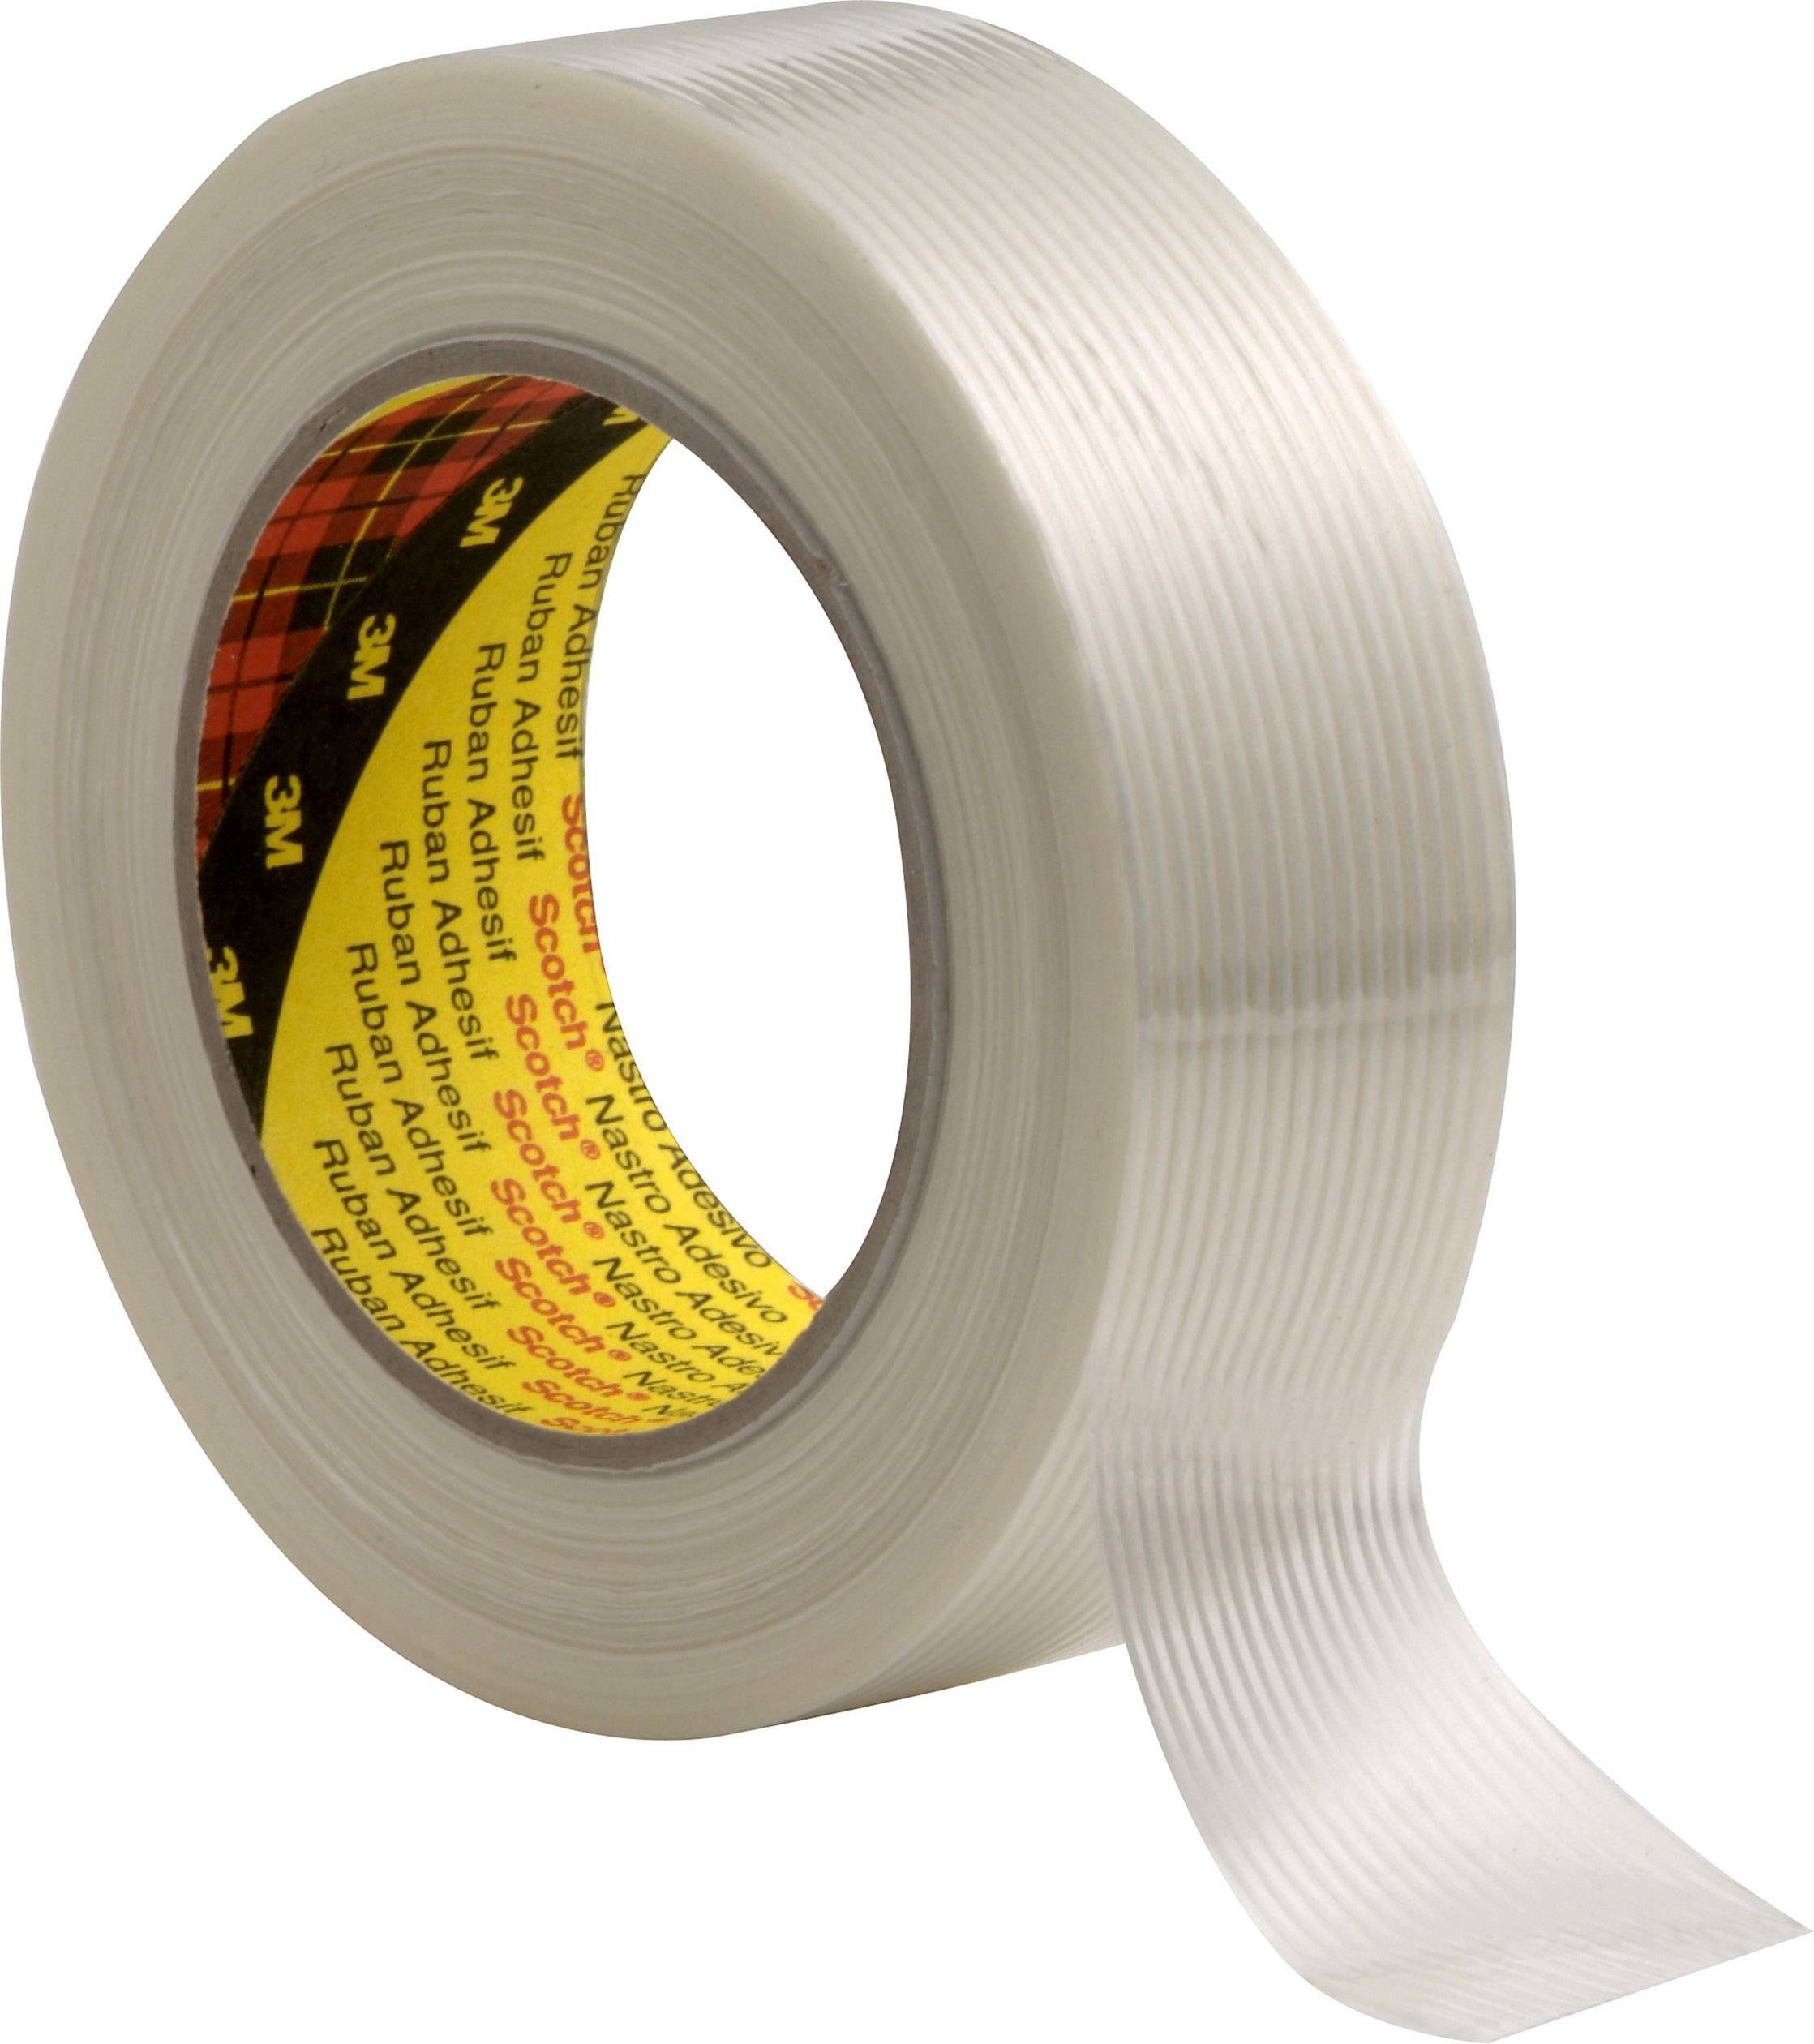 3M Scotch Bi-Directional Filament Strapping Tape #8959 50mm x 50m NEW HEAVY DUTY 